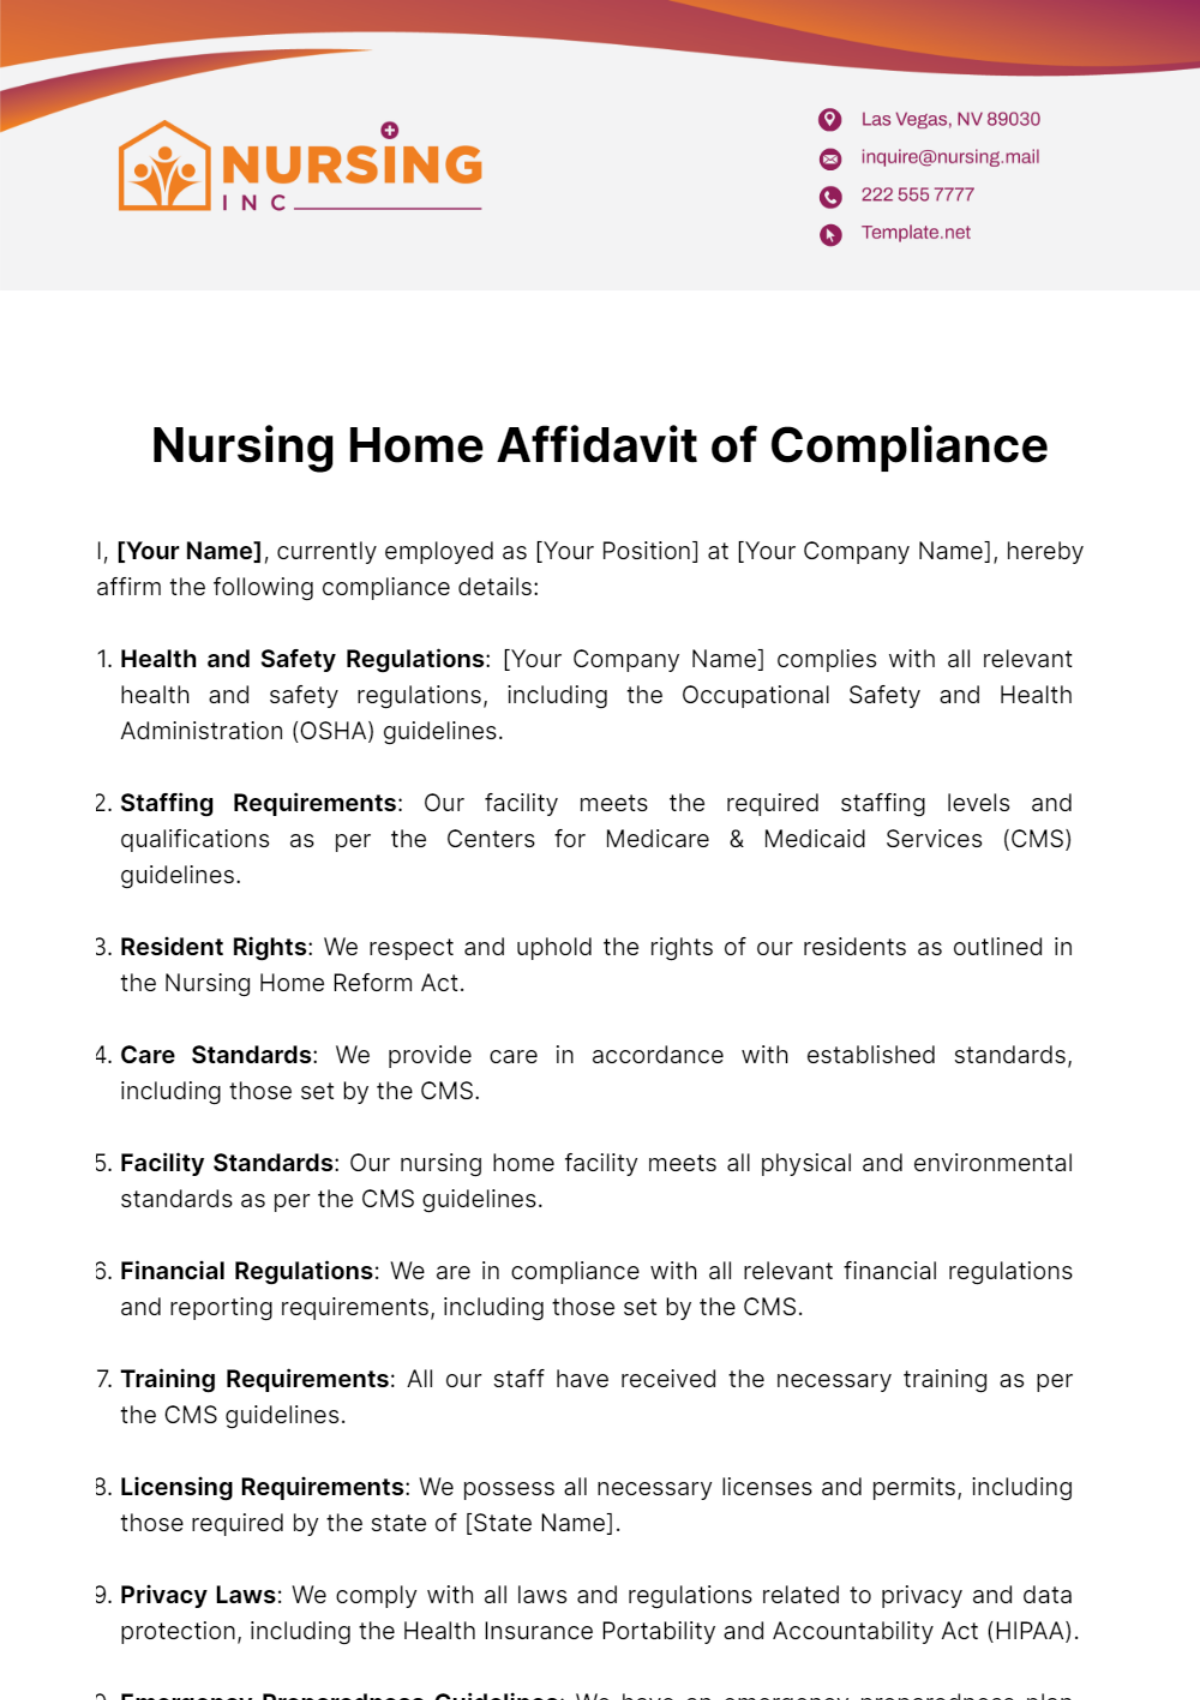 Nursing Home Affidavit of Compliance Template